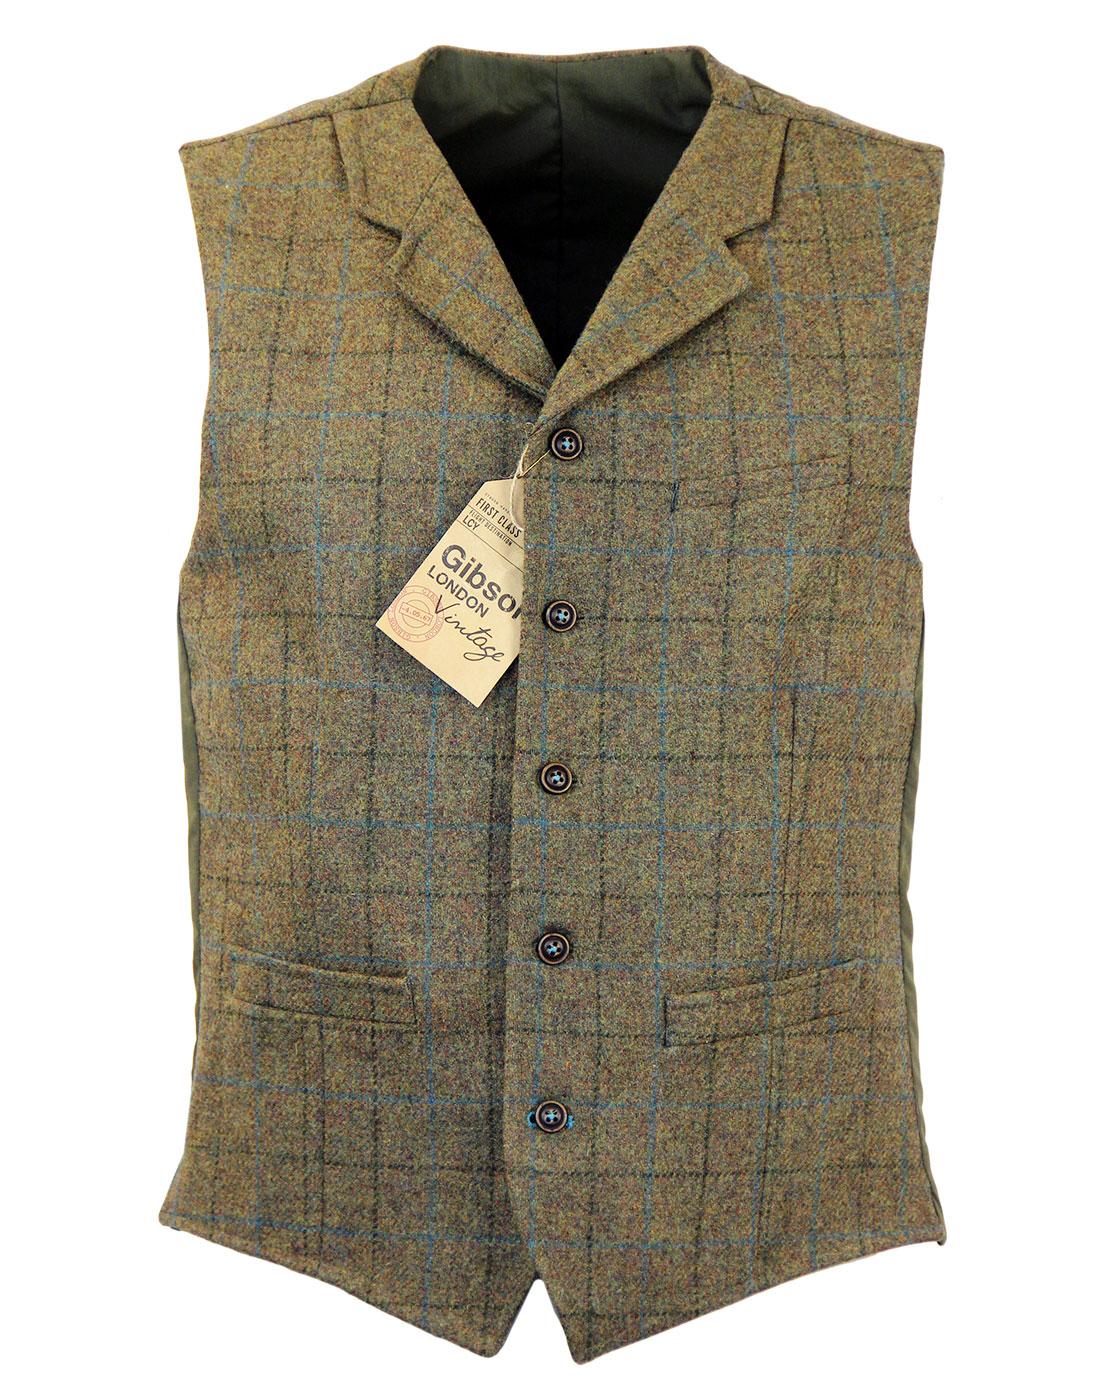 GIBSON LONDON High Fasten Tweed Check Waistcoat 